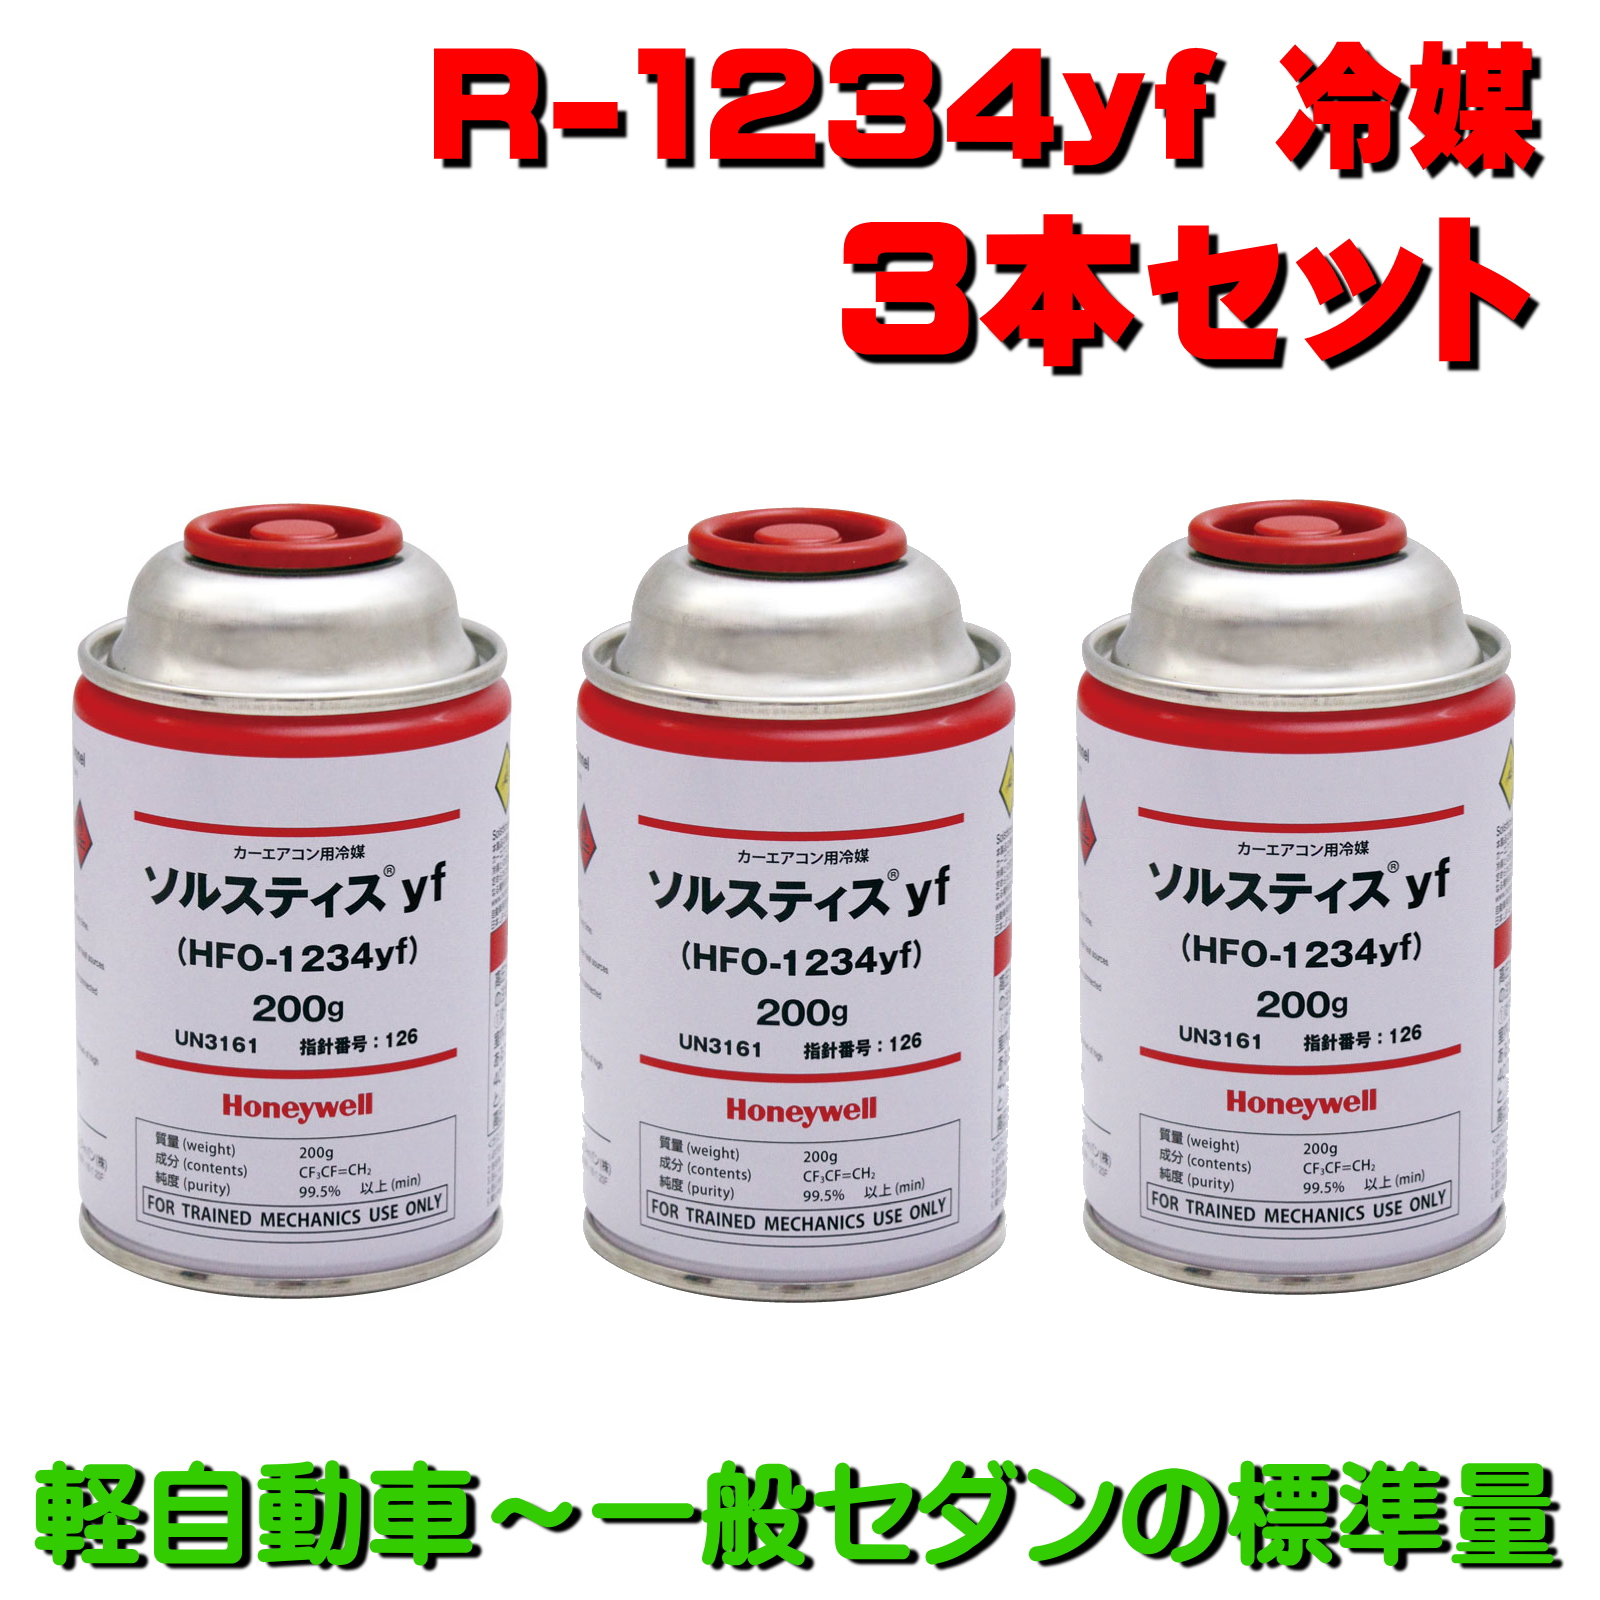 R-1234yf自動車用エアコン新ガス | rodeosemillas.com